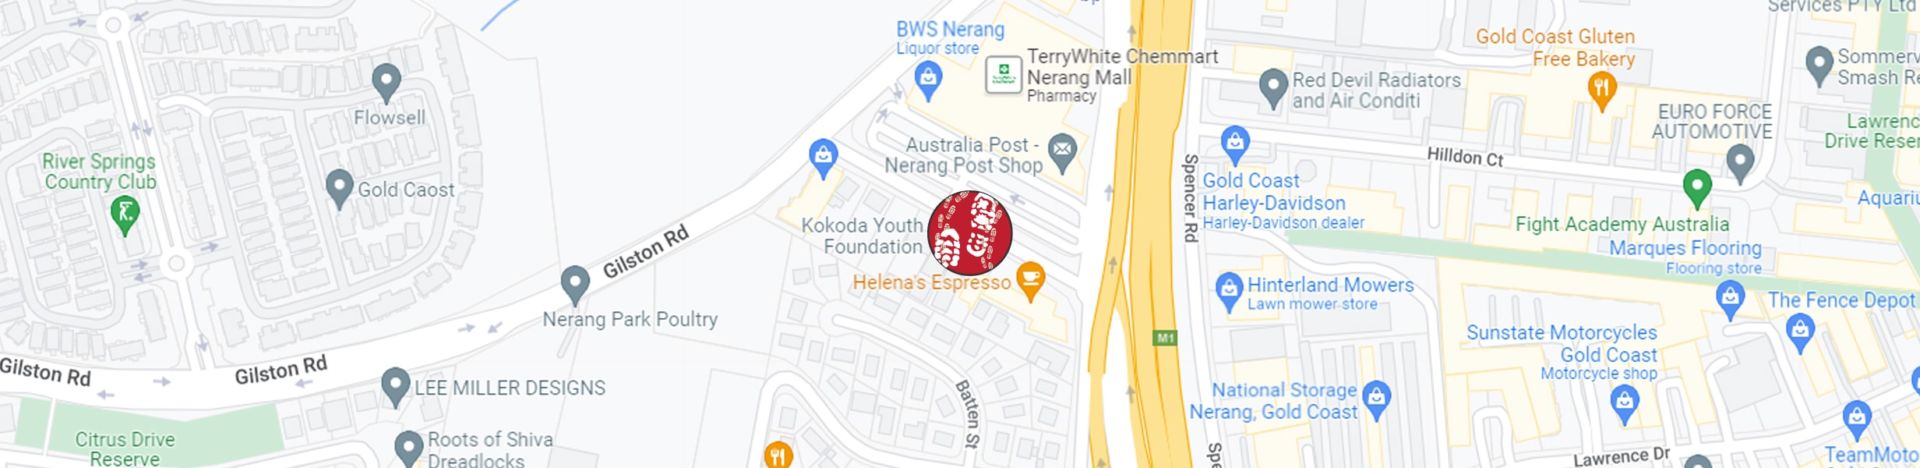 Location of the Kokoda Youth Foundation on Google Maps